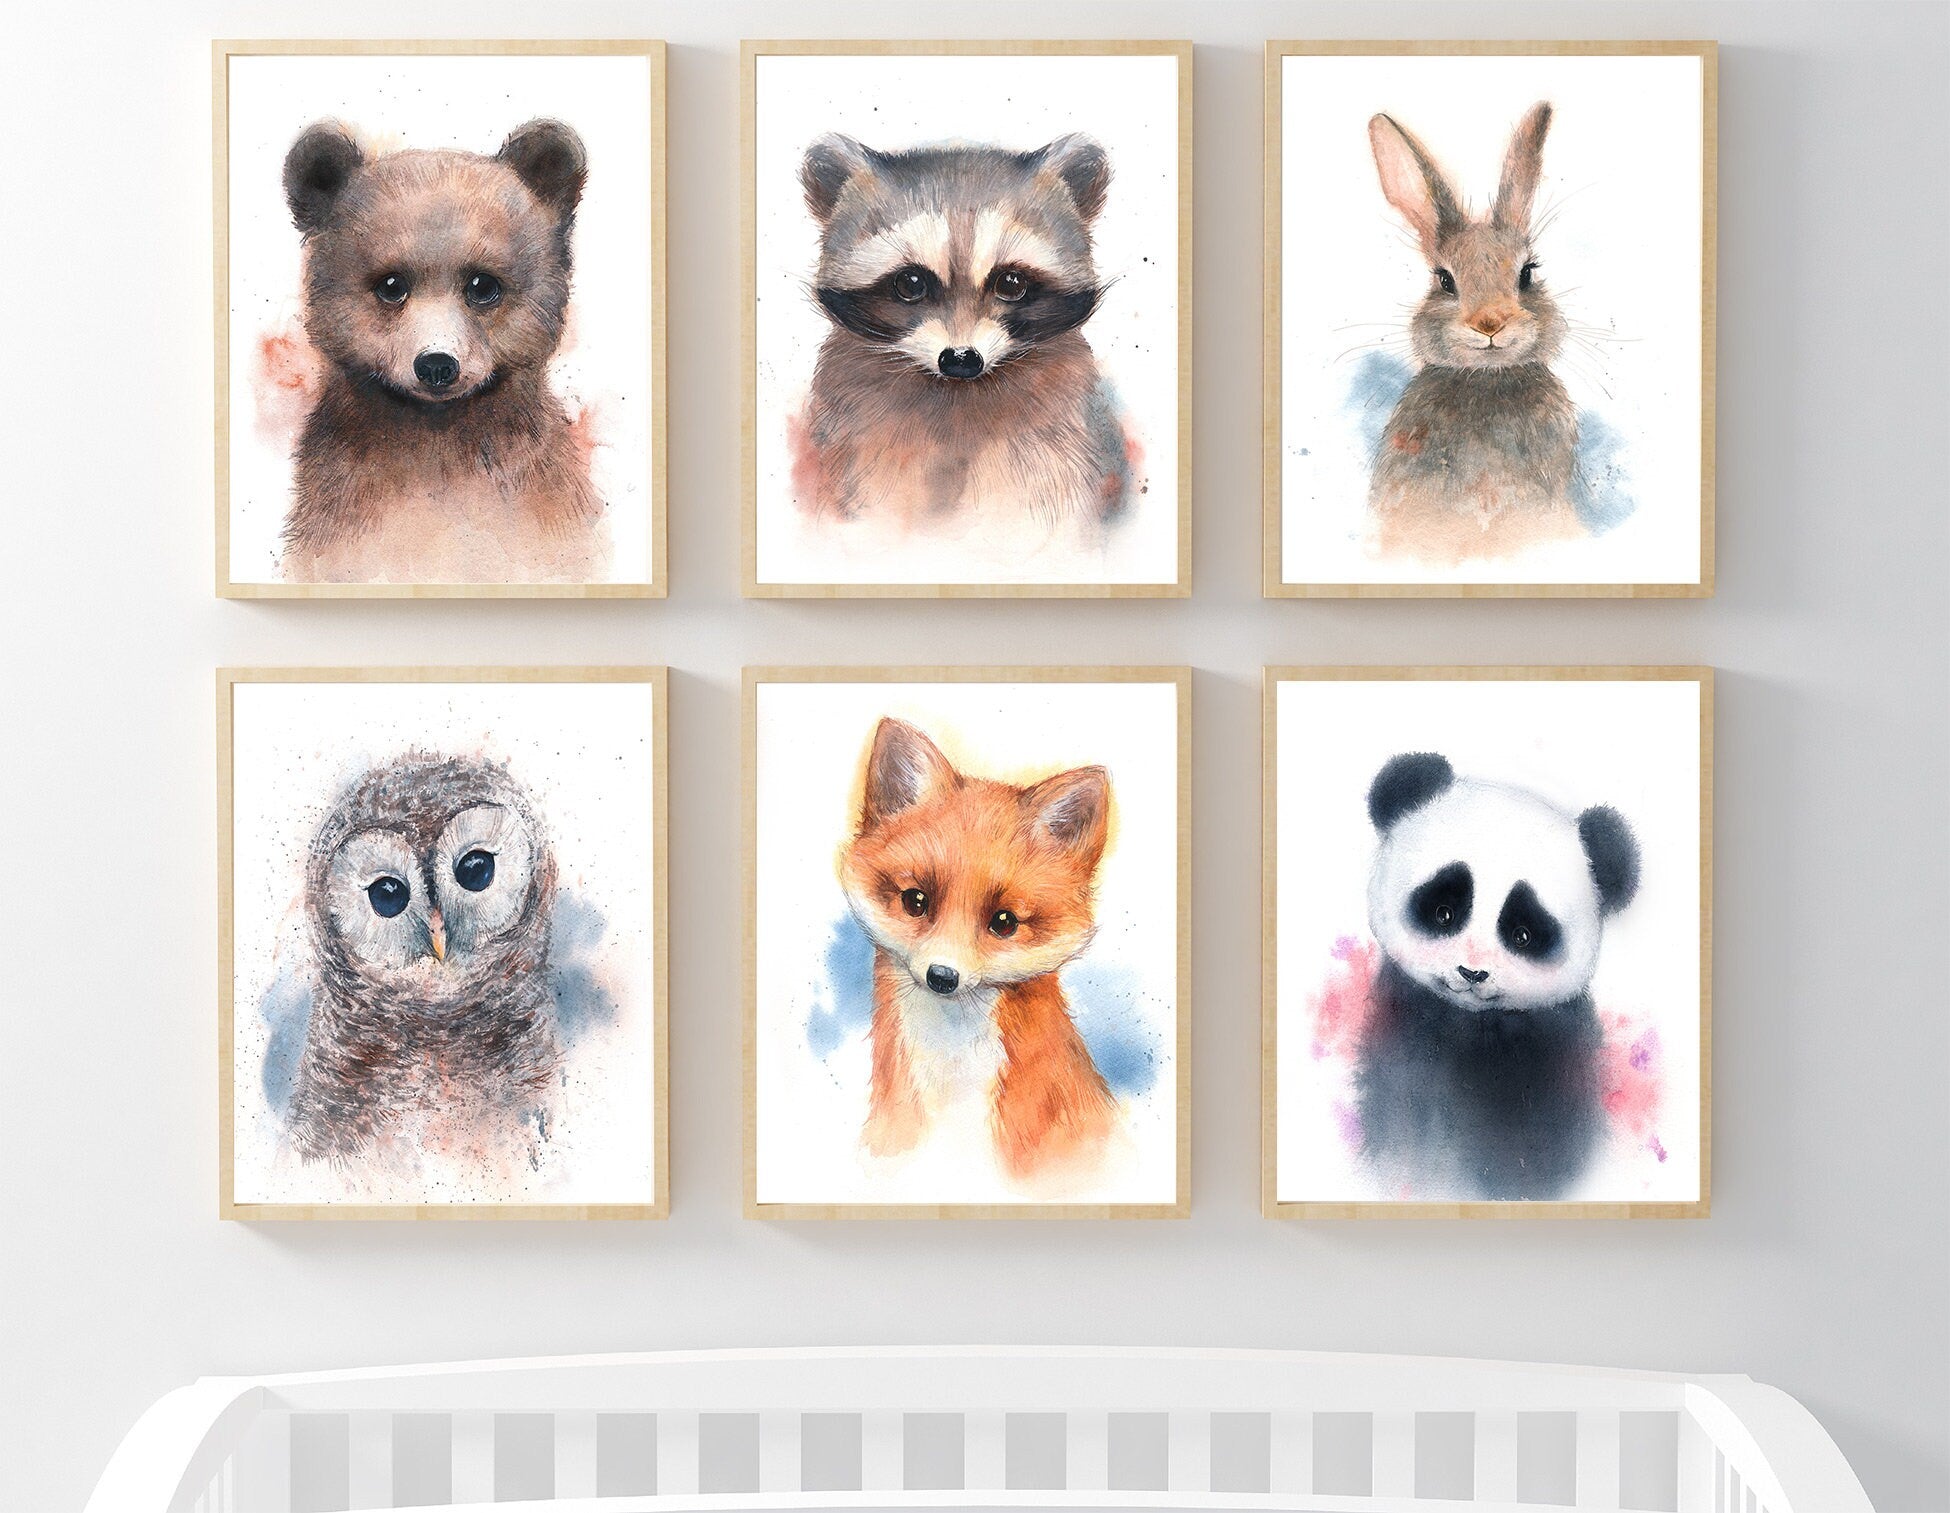 Baby Panda Print, Panda Nursery Art, Nursery Animal Print, Cute Panda Wall Decor, Nursery Wall Decor, Kids Bedroom Wall Art, Boys Room Decor